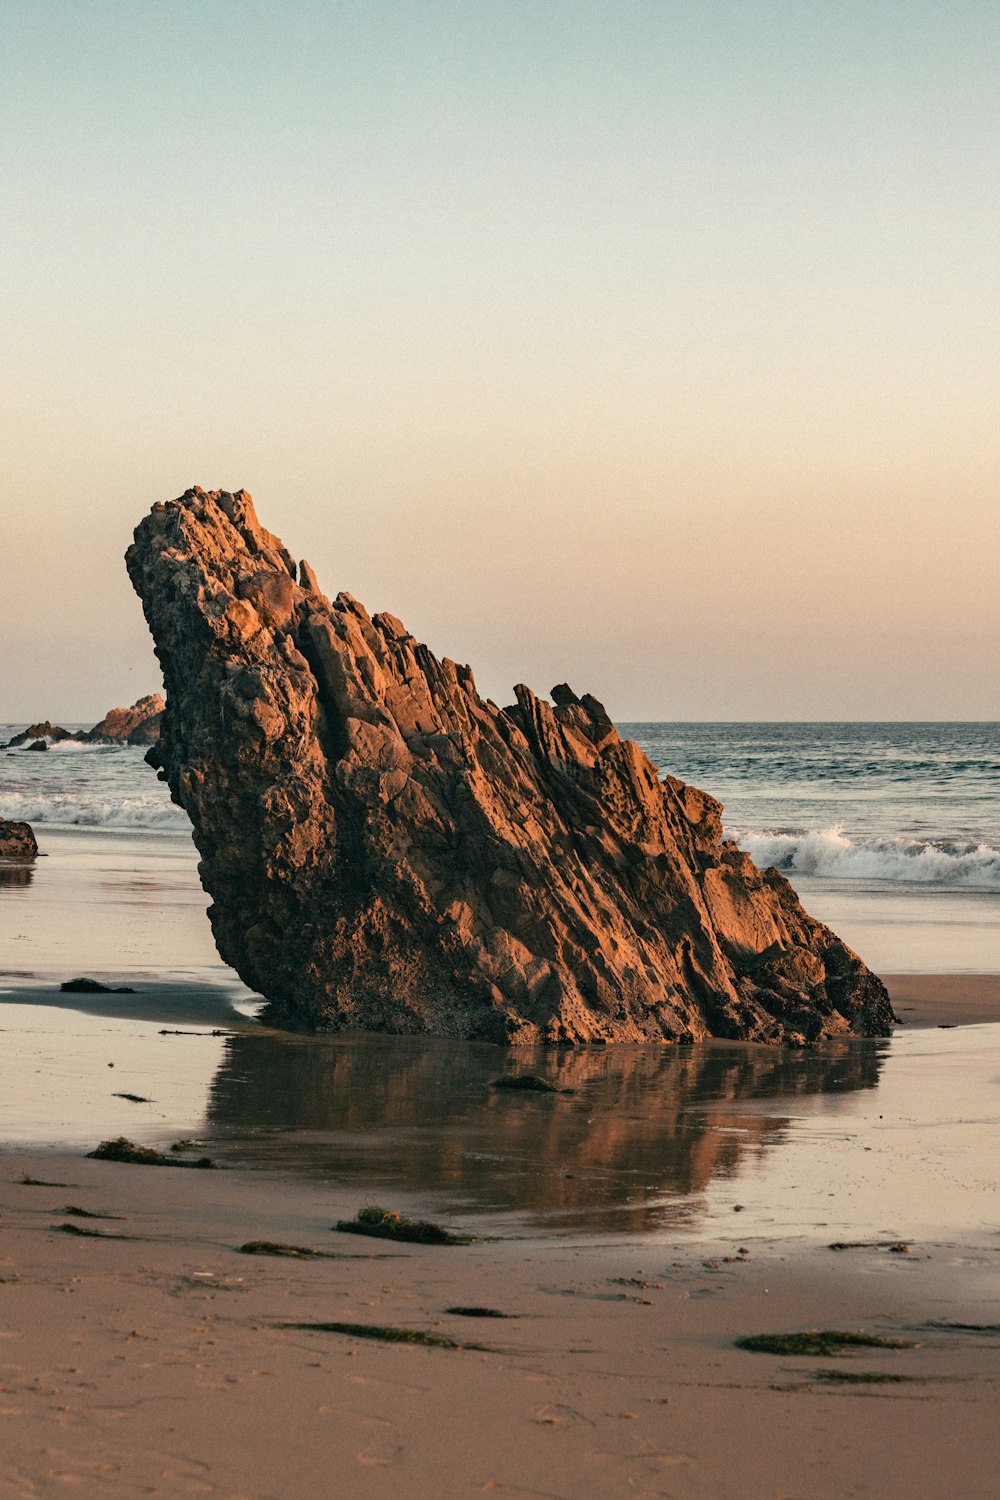 una gran roca sentada en la cima de una playa de arena